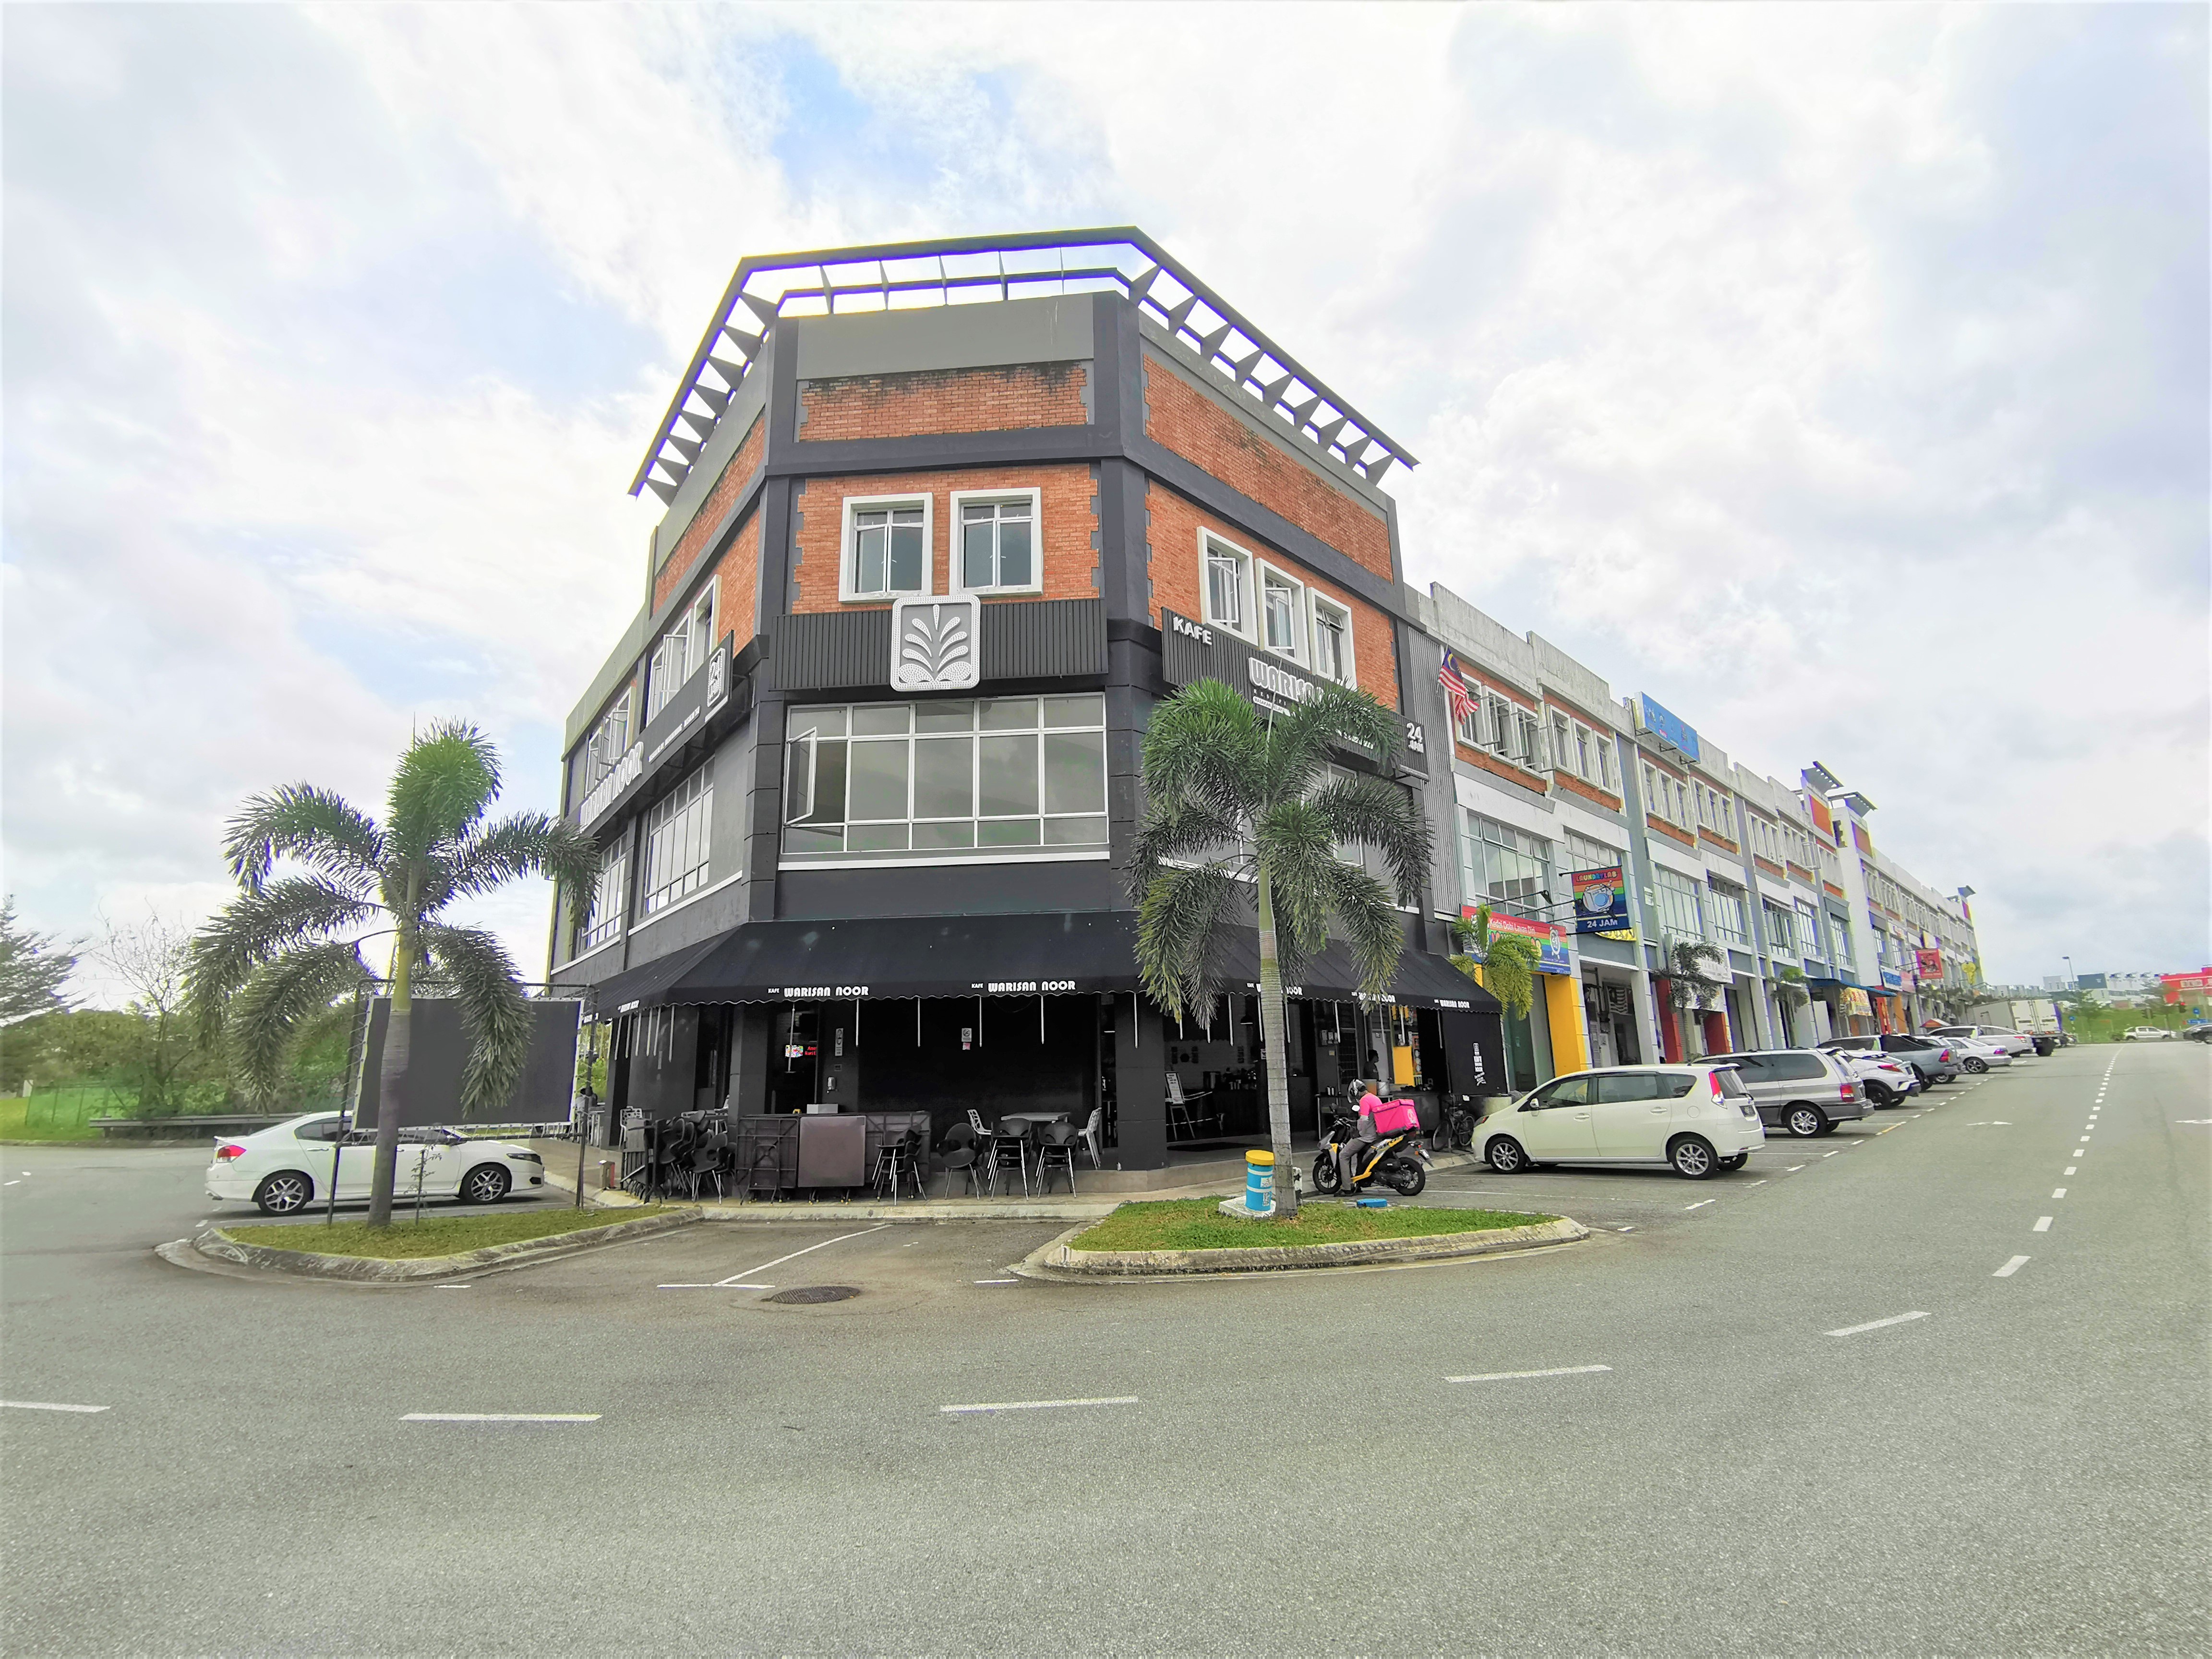 Located at Jalan Sentral 28, Taman Nusa Sentral, Iskandar Puteri